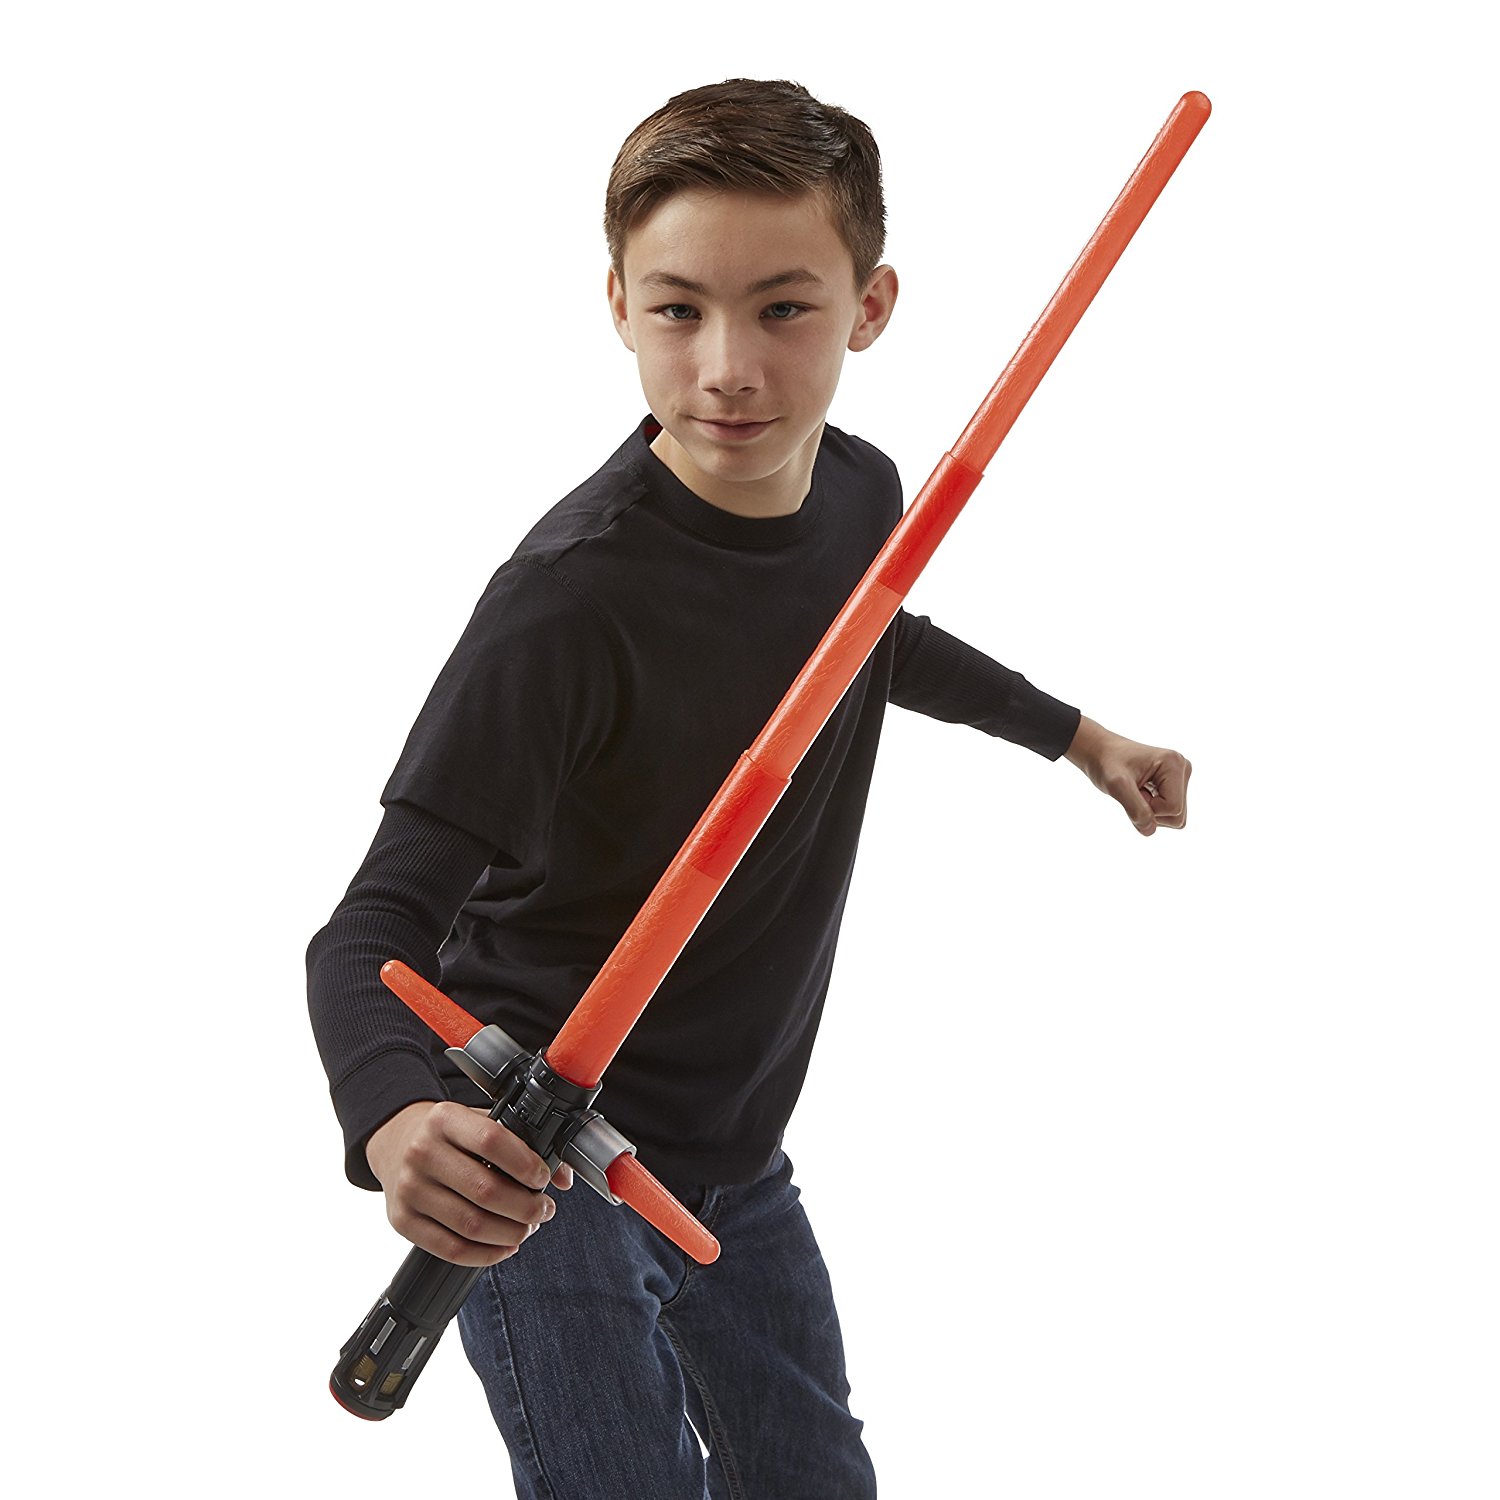 Disney Star Wars 'Kylo Ren' E7 Electronic Lightsaber Play Set Toy